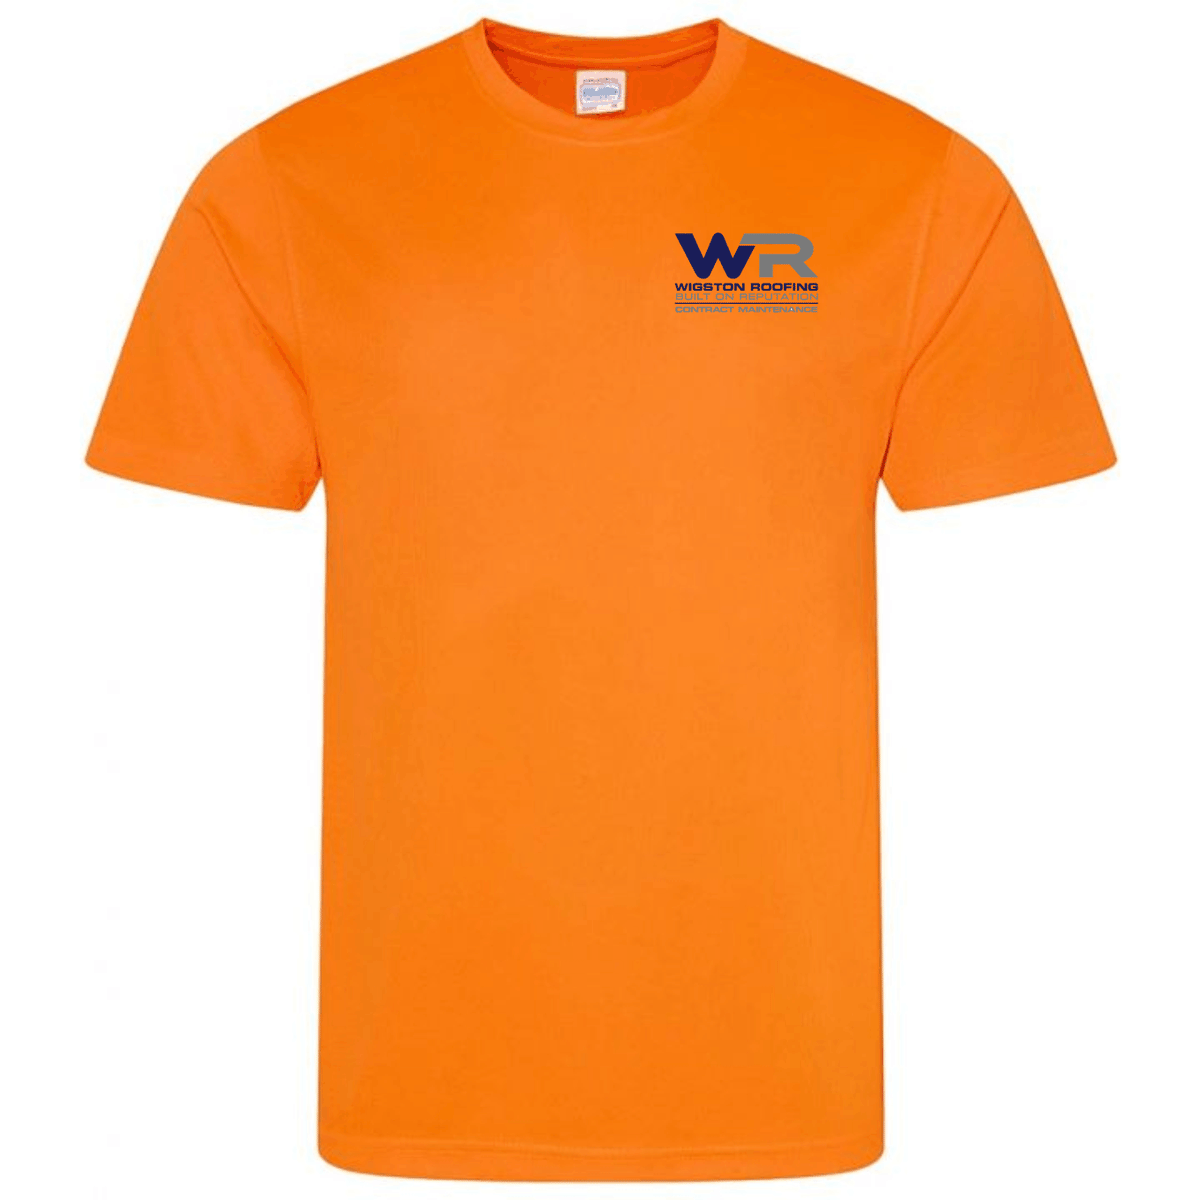 Wigston Roofing - T-Shirt (JC001)